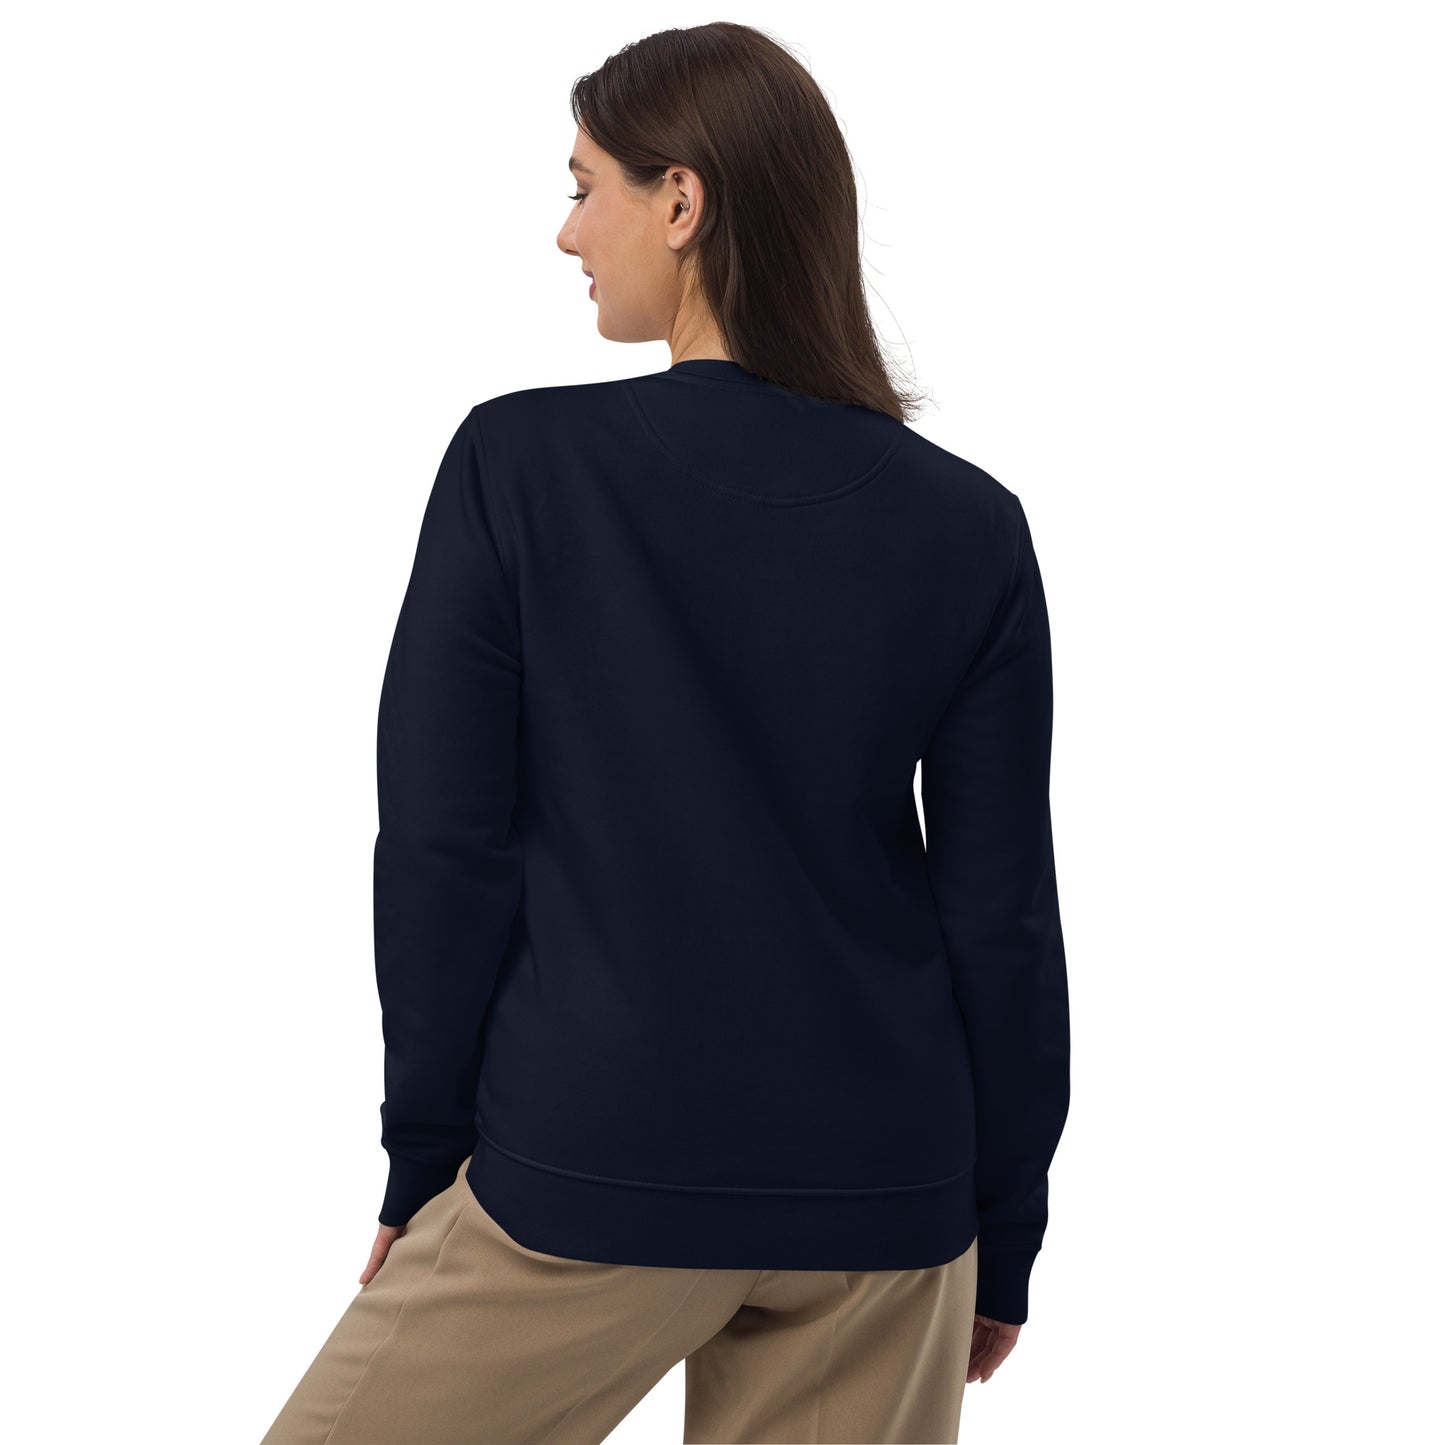 FE015.2 - Unisex Bio-Pullover - Sweater - Sweatshirt - Free the World 1 - white logo